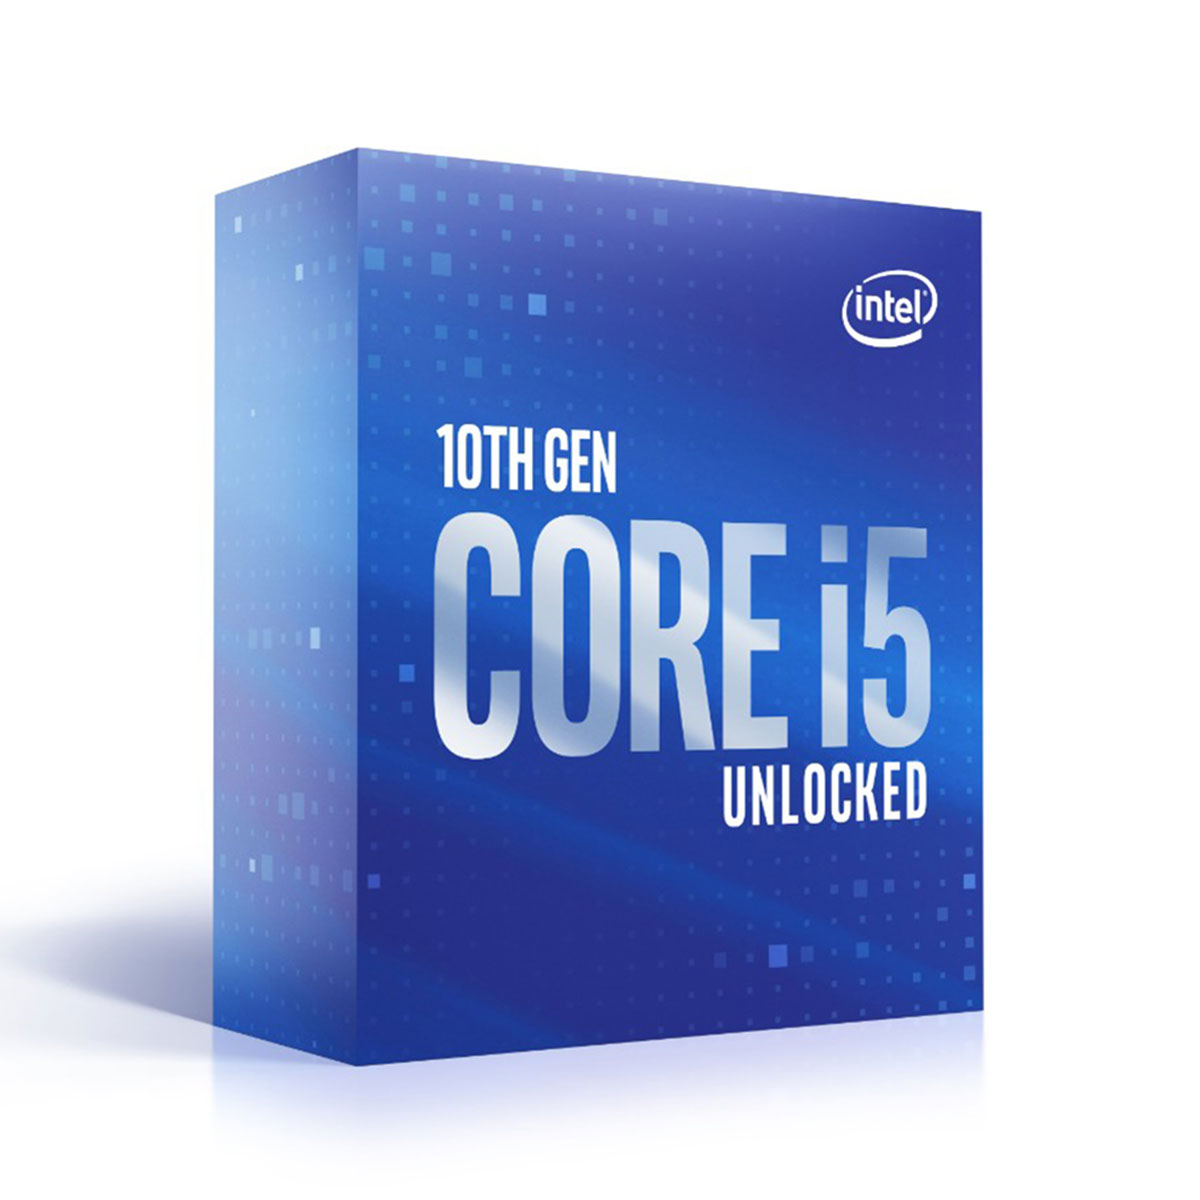 Intel - Intel Core i5-10600K 4.10GHz (Comet Lake) Socket LGA1200 Processor - Retail